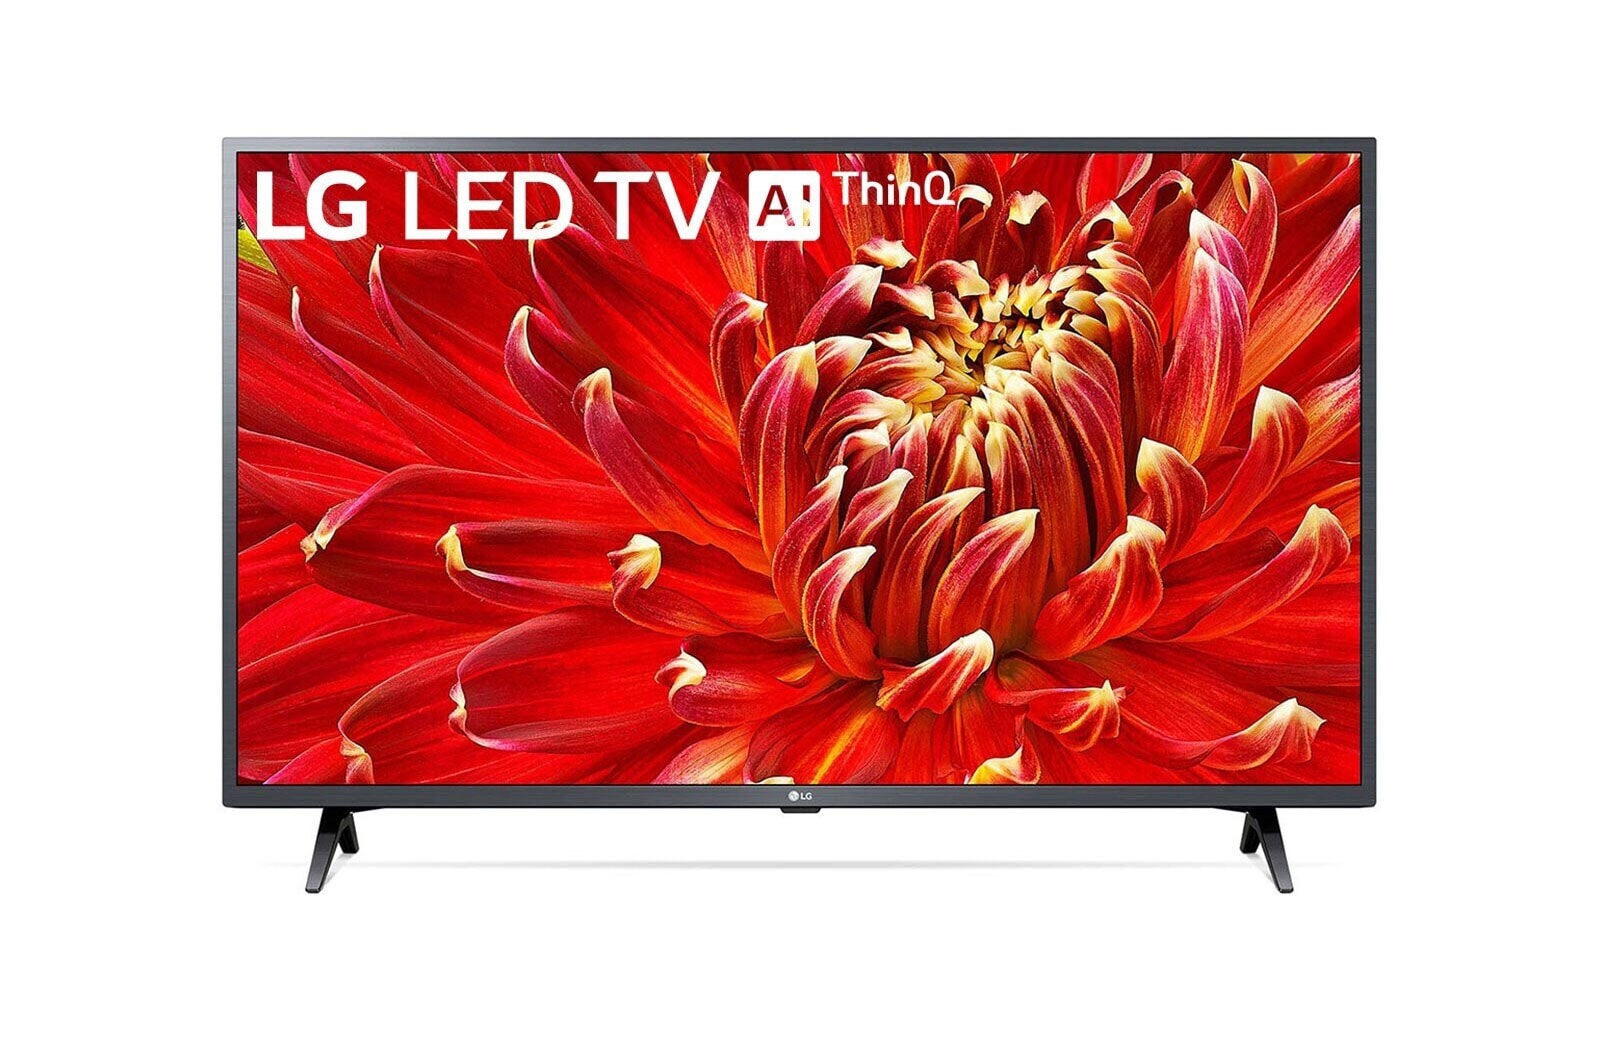 LG تلفزيون LED الذكي مقاس 43 بوصة LM6370 من LG، تلفزيون LED الذكي بتقنية Full HD HDR، تلفزيون w/ThinQ AI, رؤية أمامية مع صورة بينية, 43LM6370PVA